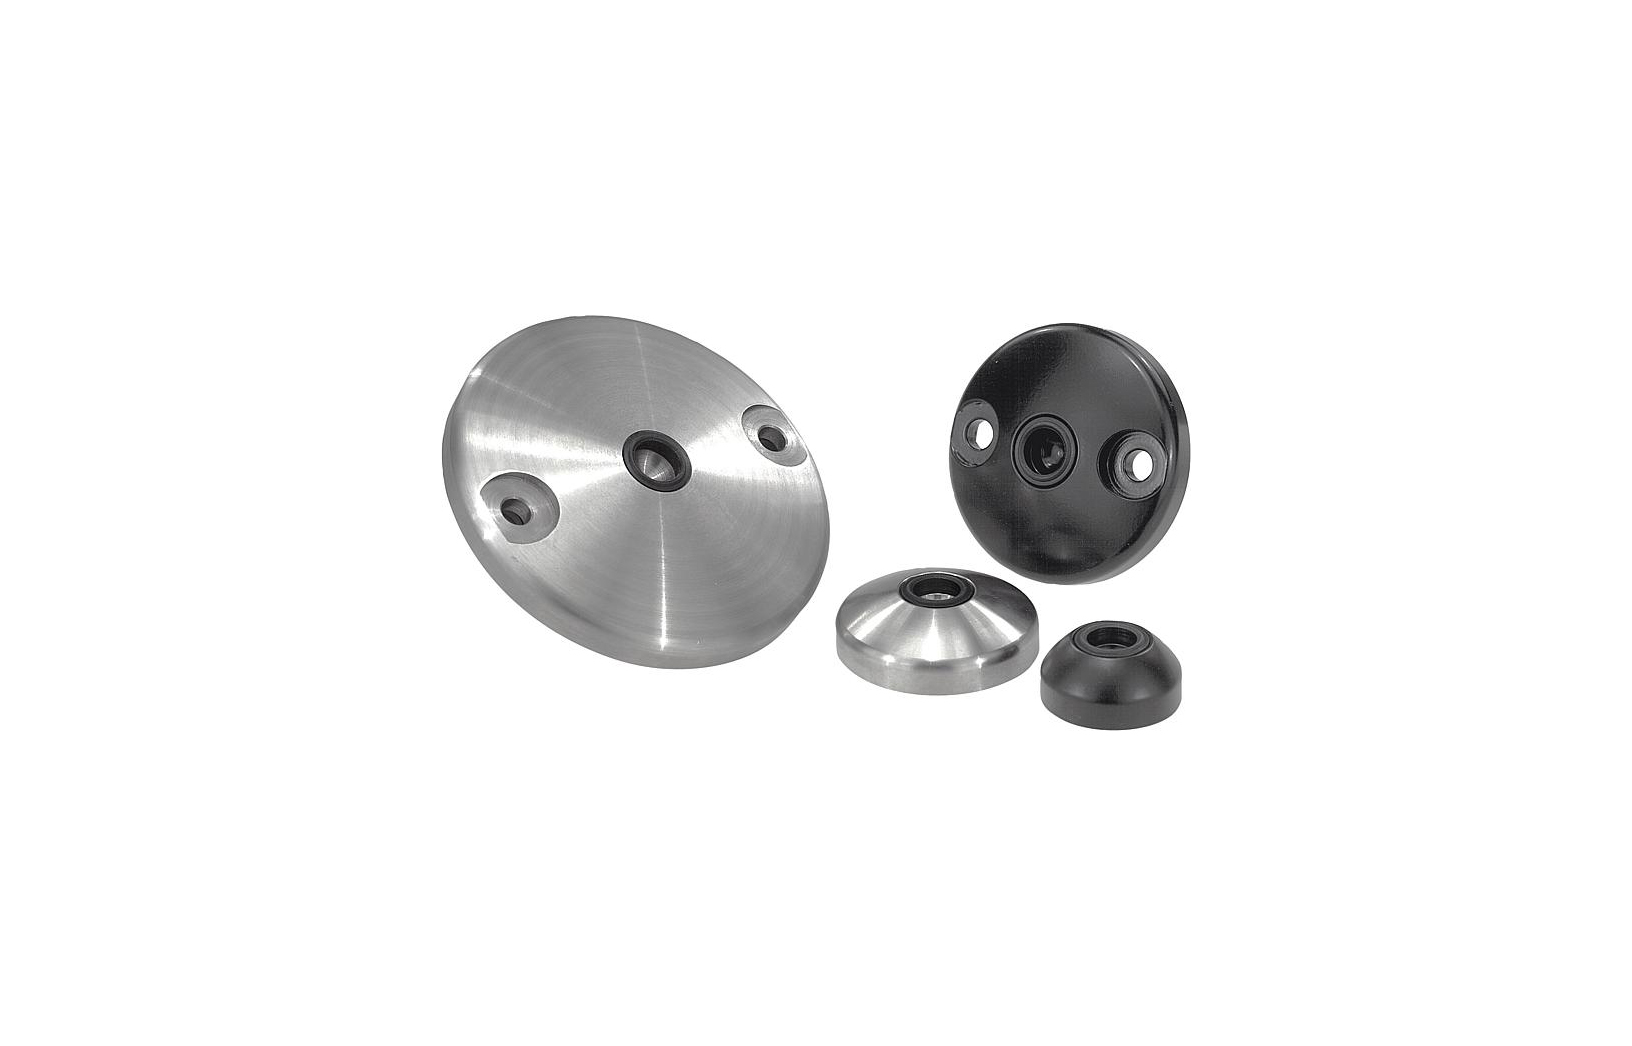 K0416 Swivel feet plates die-cast zinc or stainless steel